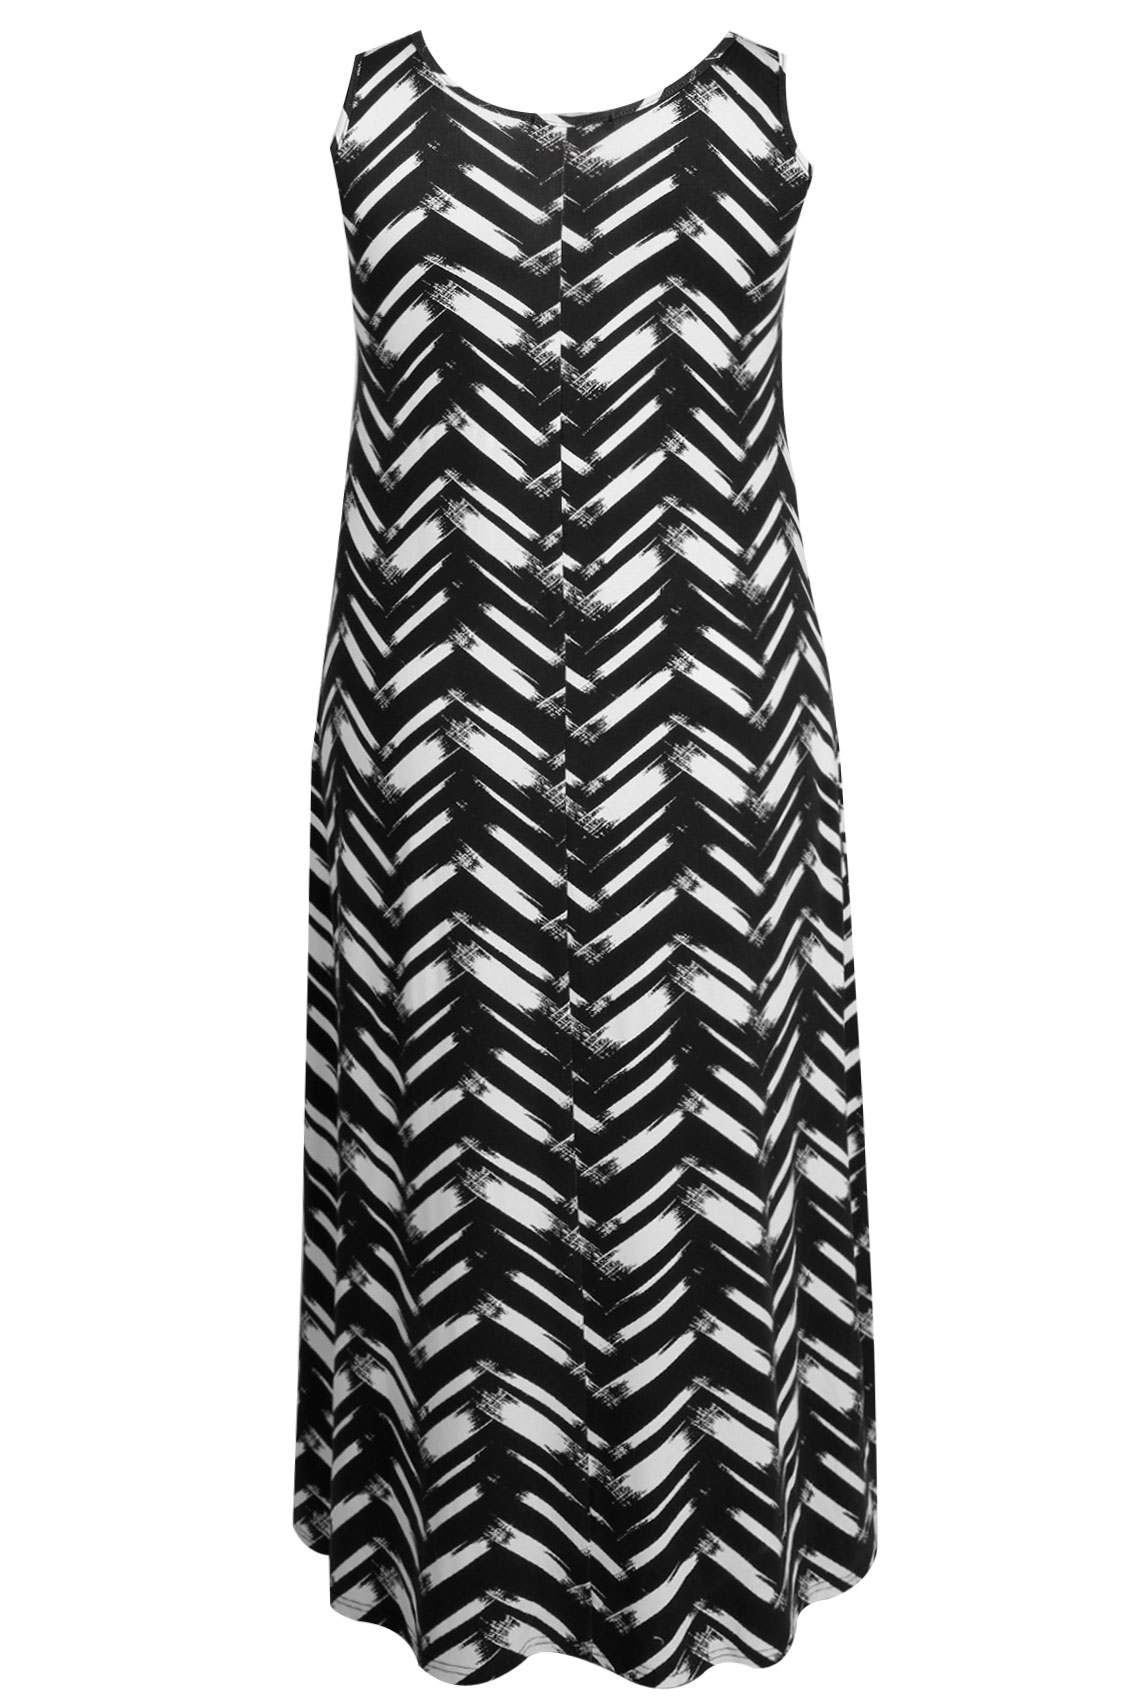 Black And White All Over Chevron Print Maxi Dress plus Size 16 to 32